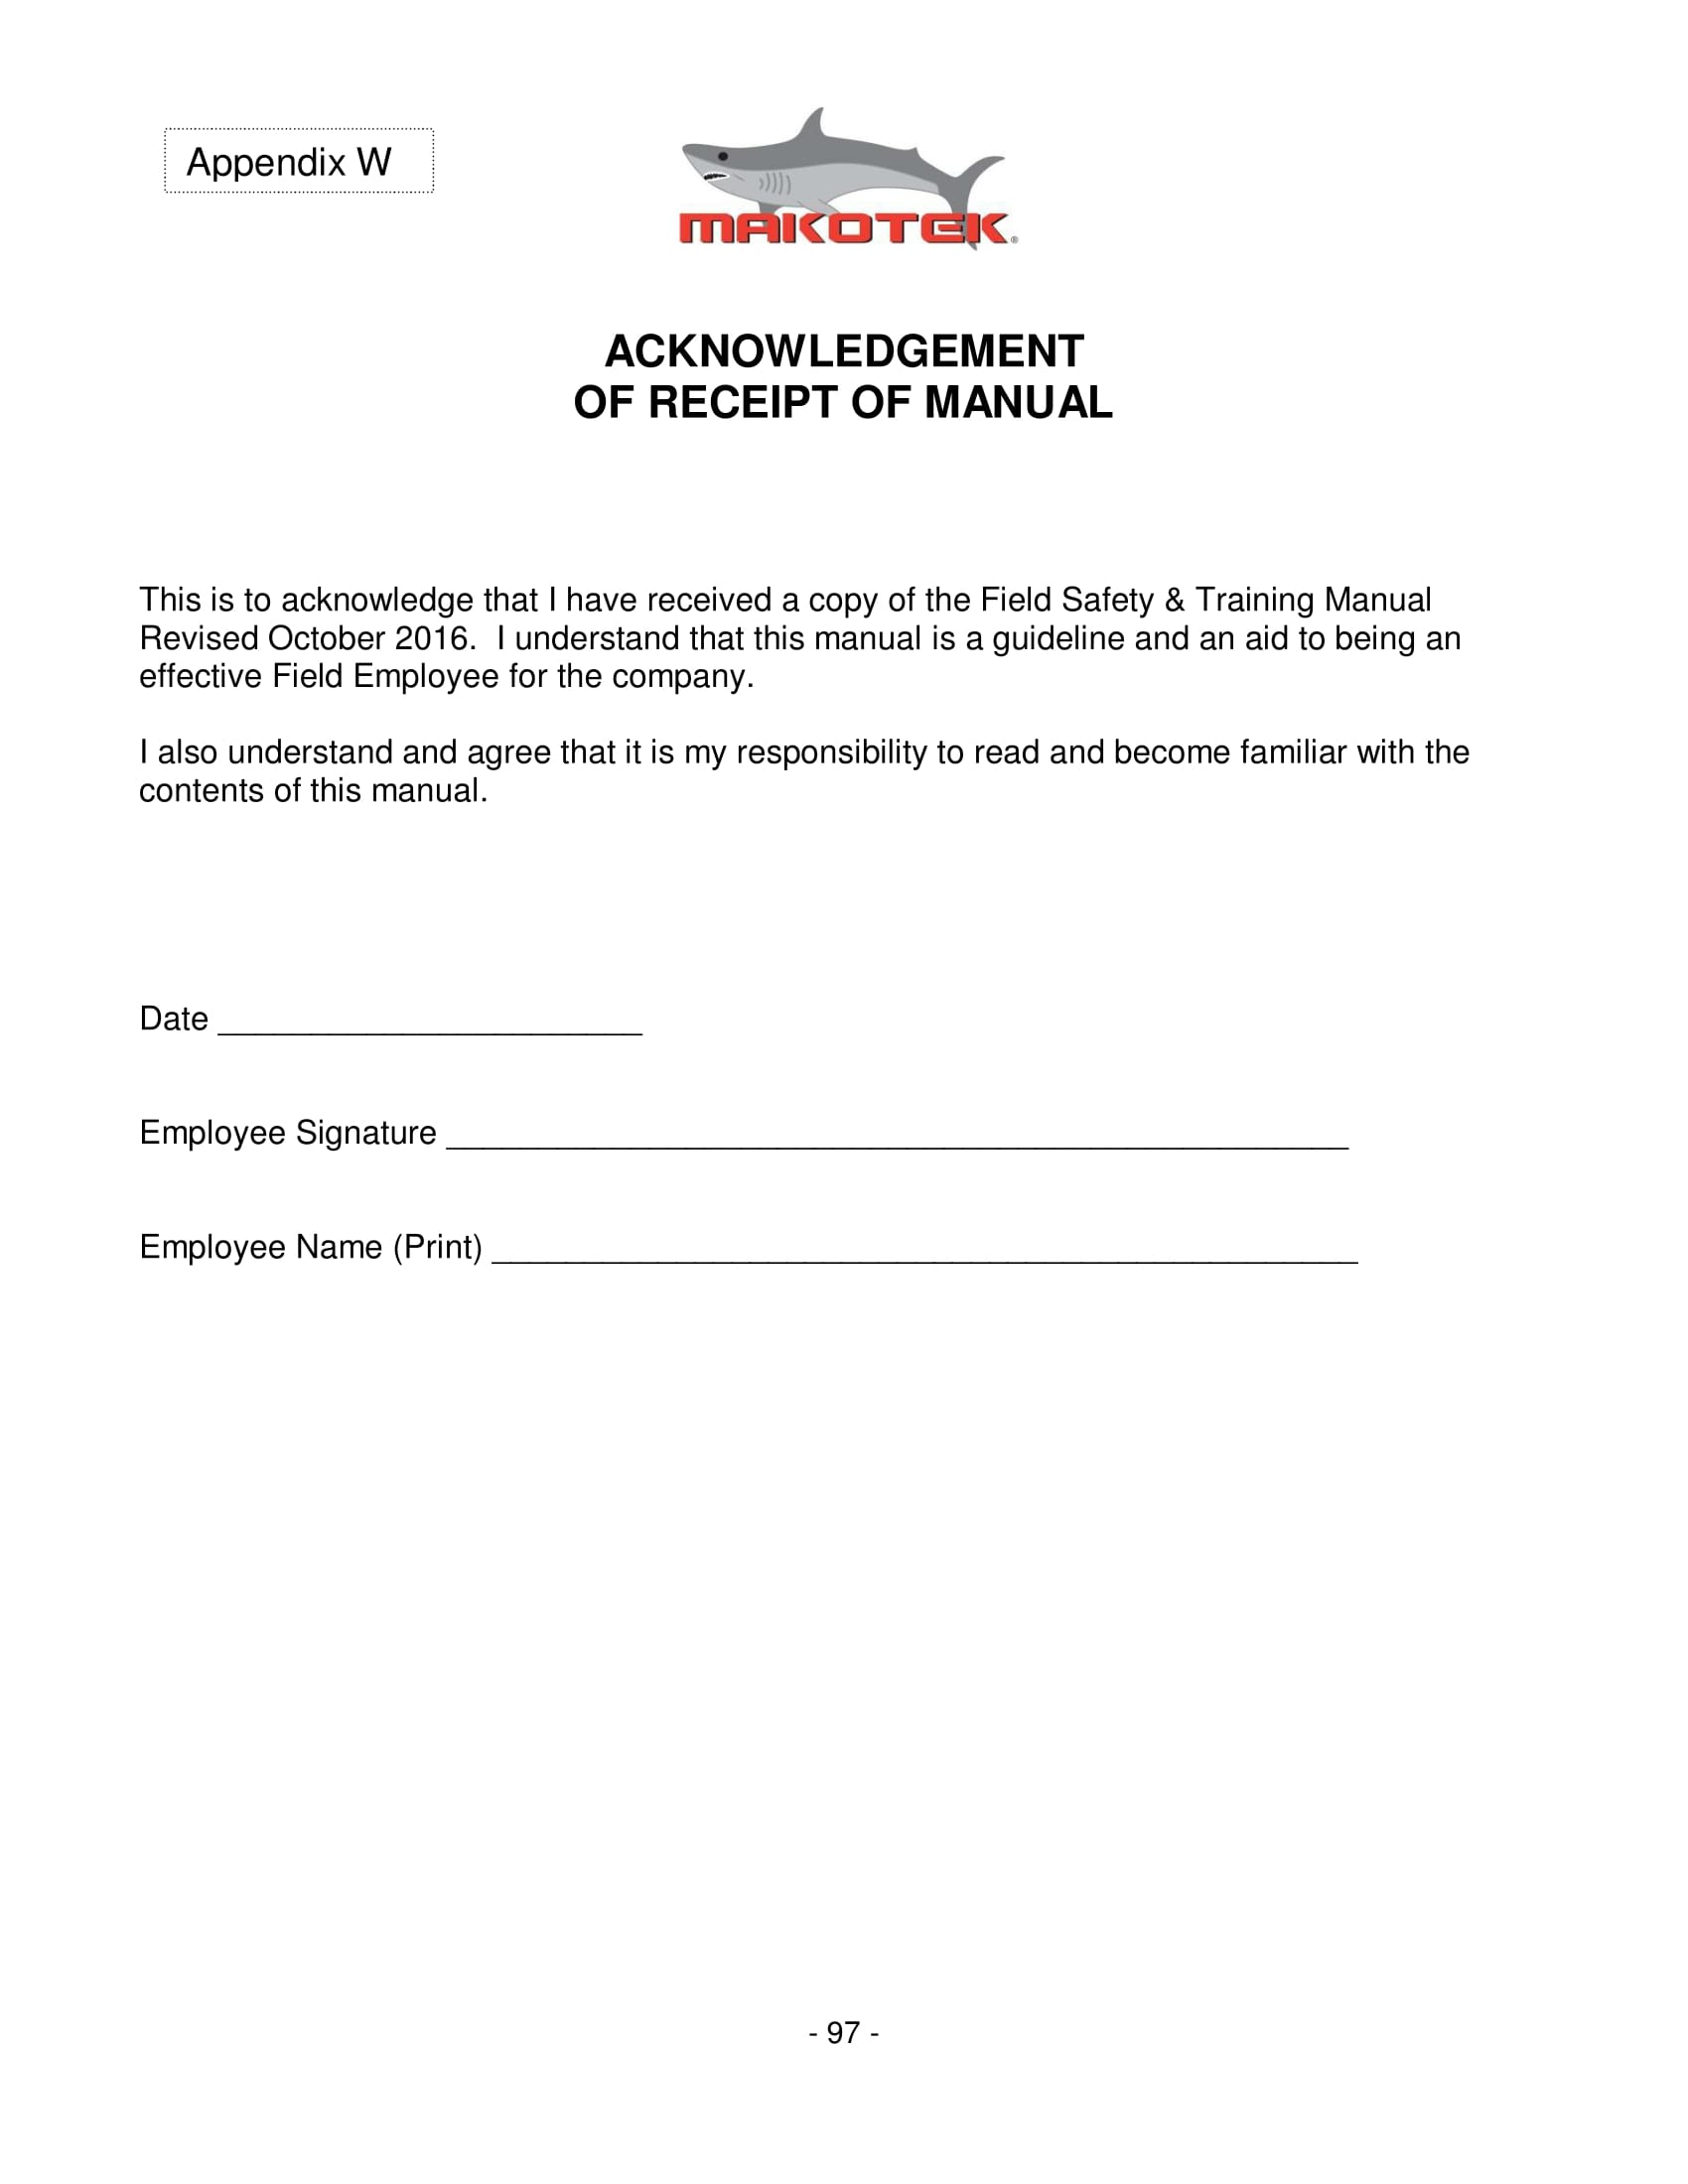 Employee Handbook Acknowledgement Form Template